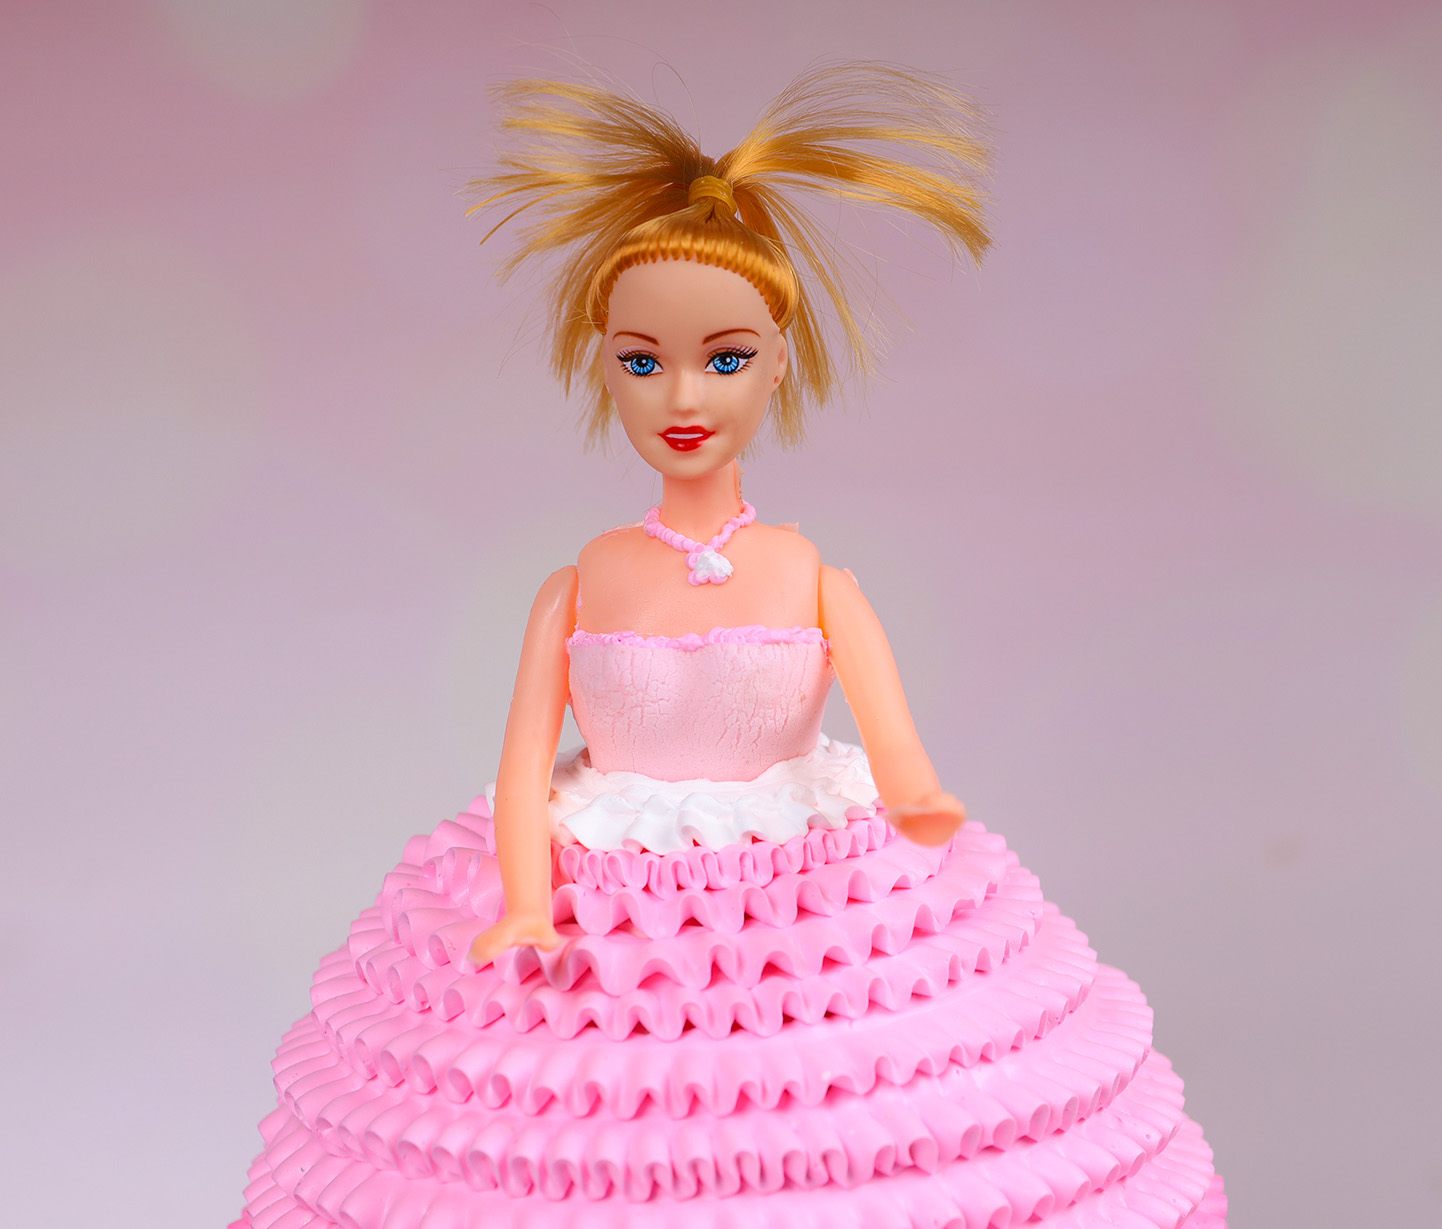 File:Barbie Doll birthday cake.jpg - Wikimedia Commons